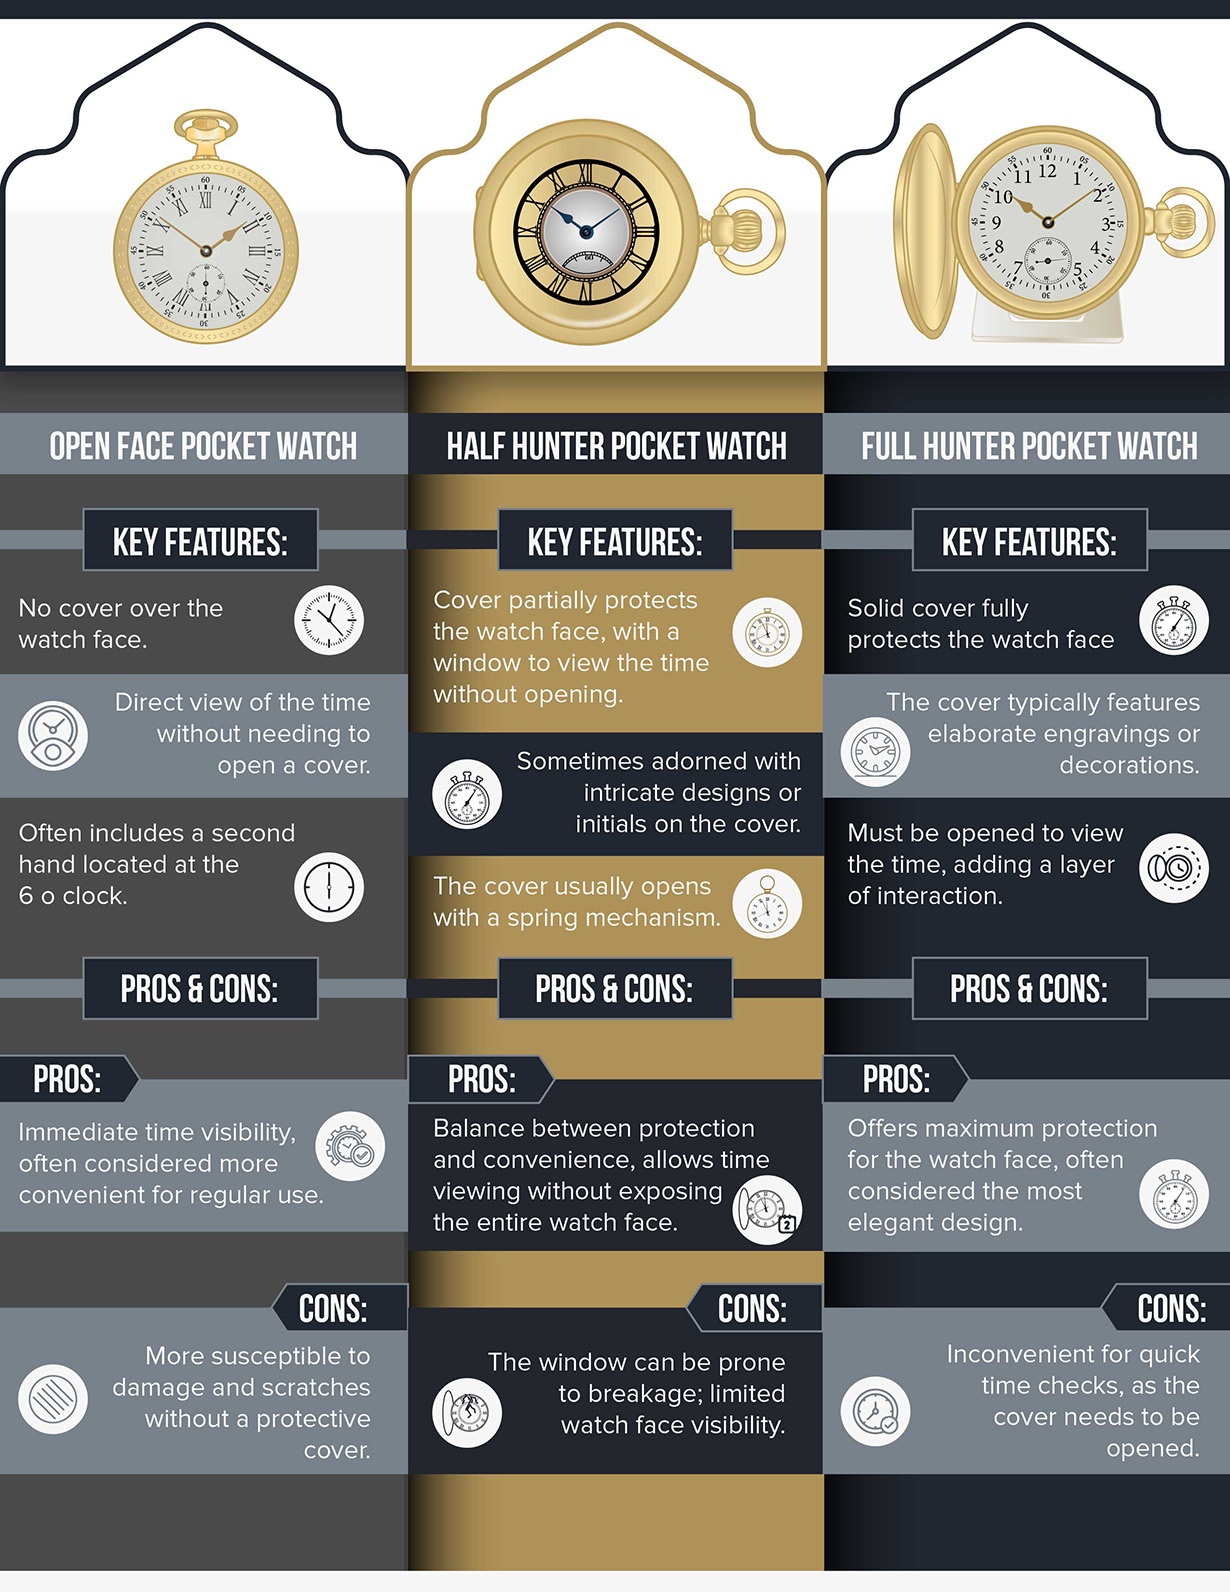 Pocket watch types